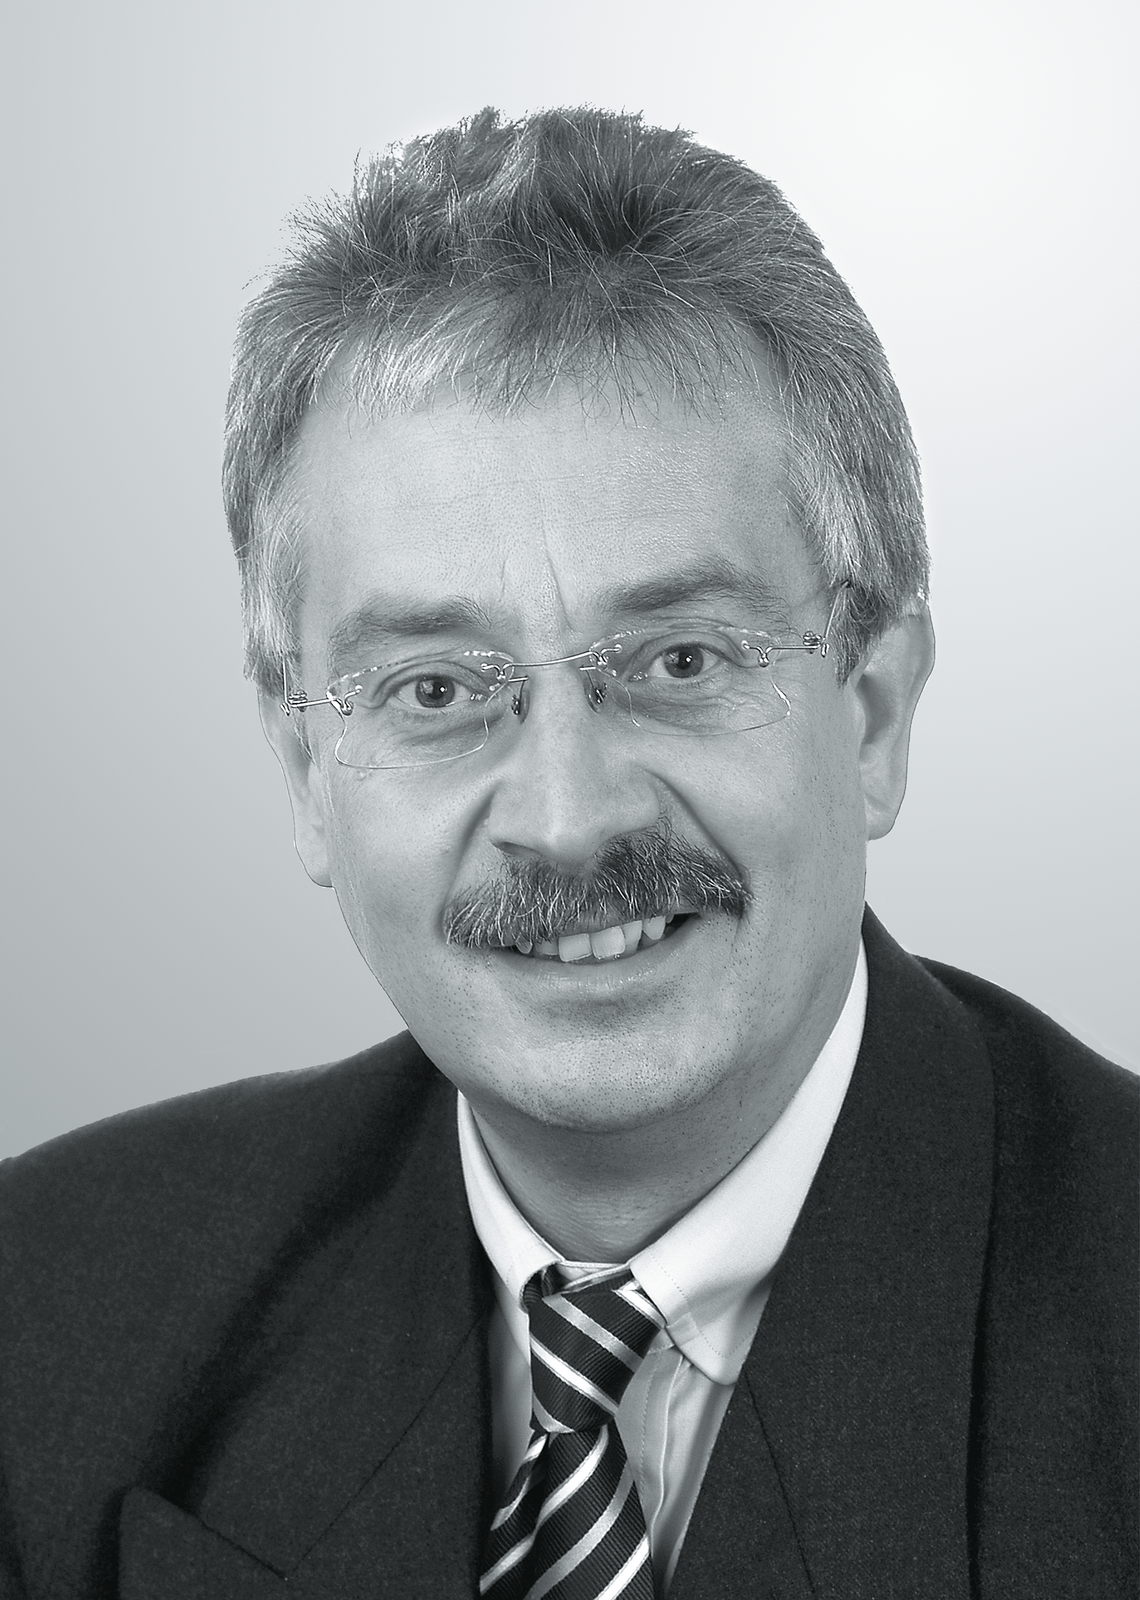 Foto Dr. Axel J. Prümm - Bürgermeister der Stadt Grevenbroich 2004 - 2009